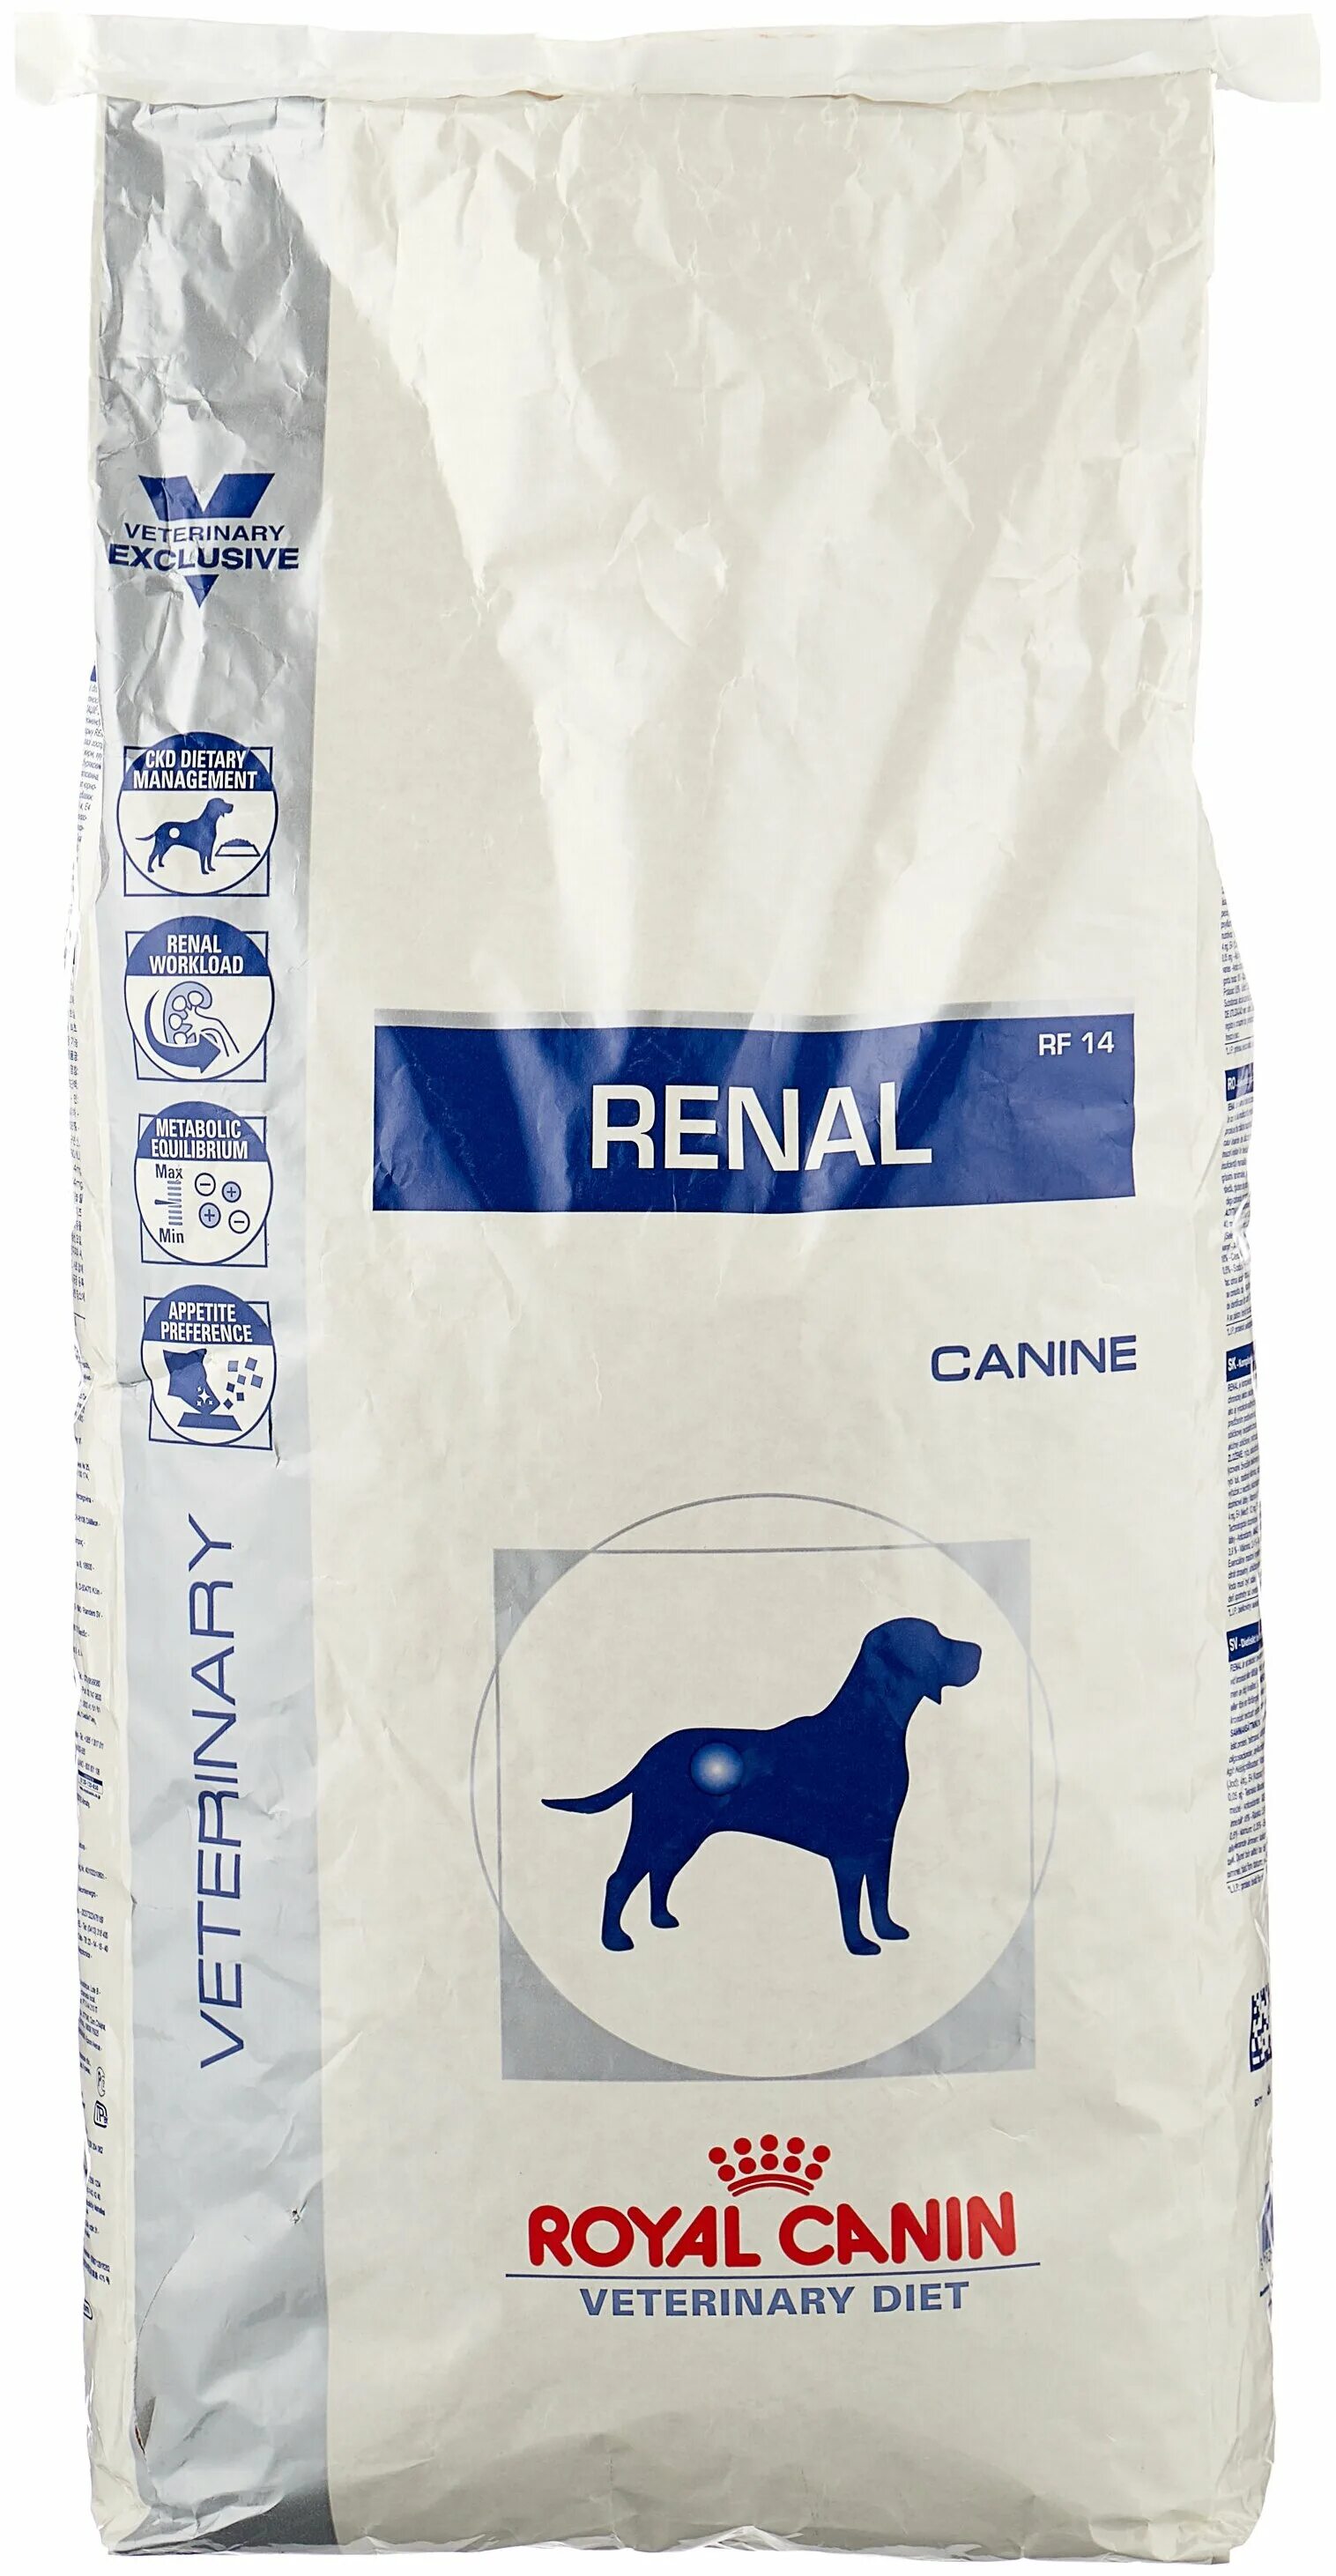 Почечный корм для собак. Корм Royal Canin renal. Сухой корм для собак Royal Canin renal rf14 при заболеваниях почек 14 кг. Роял Канин Ренал для собак 14 кг. Корм Роял Канин Ренал для собак.